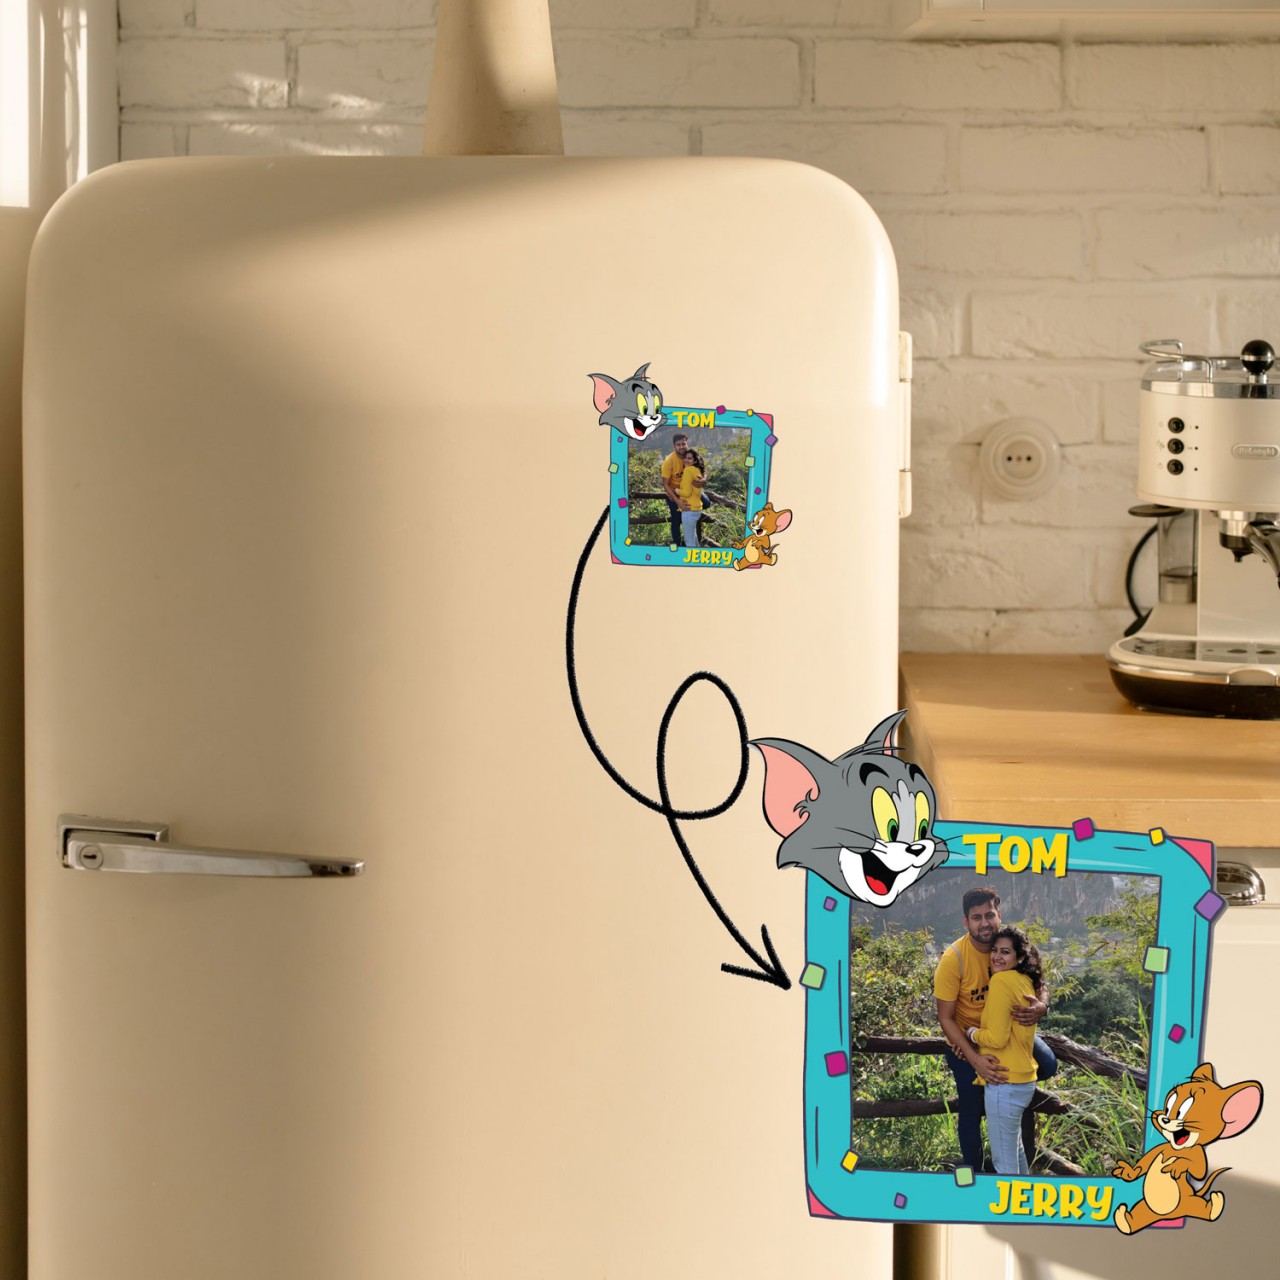 Tom & Jerry Personalized Fridge Magnet